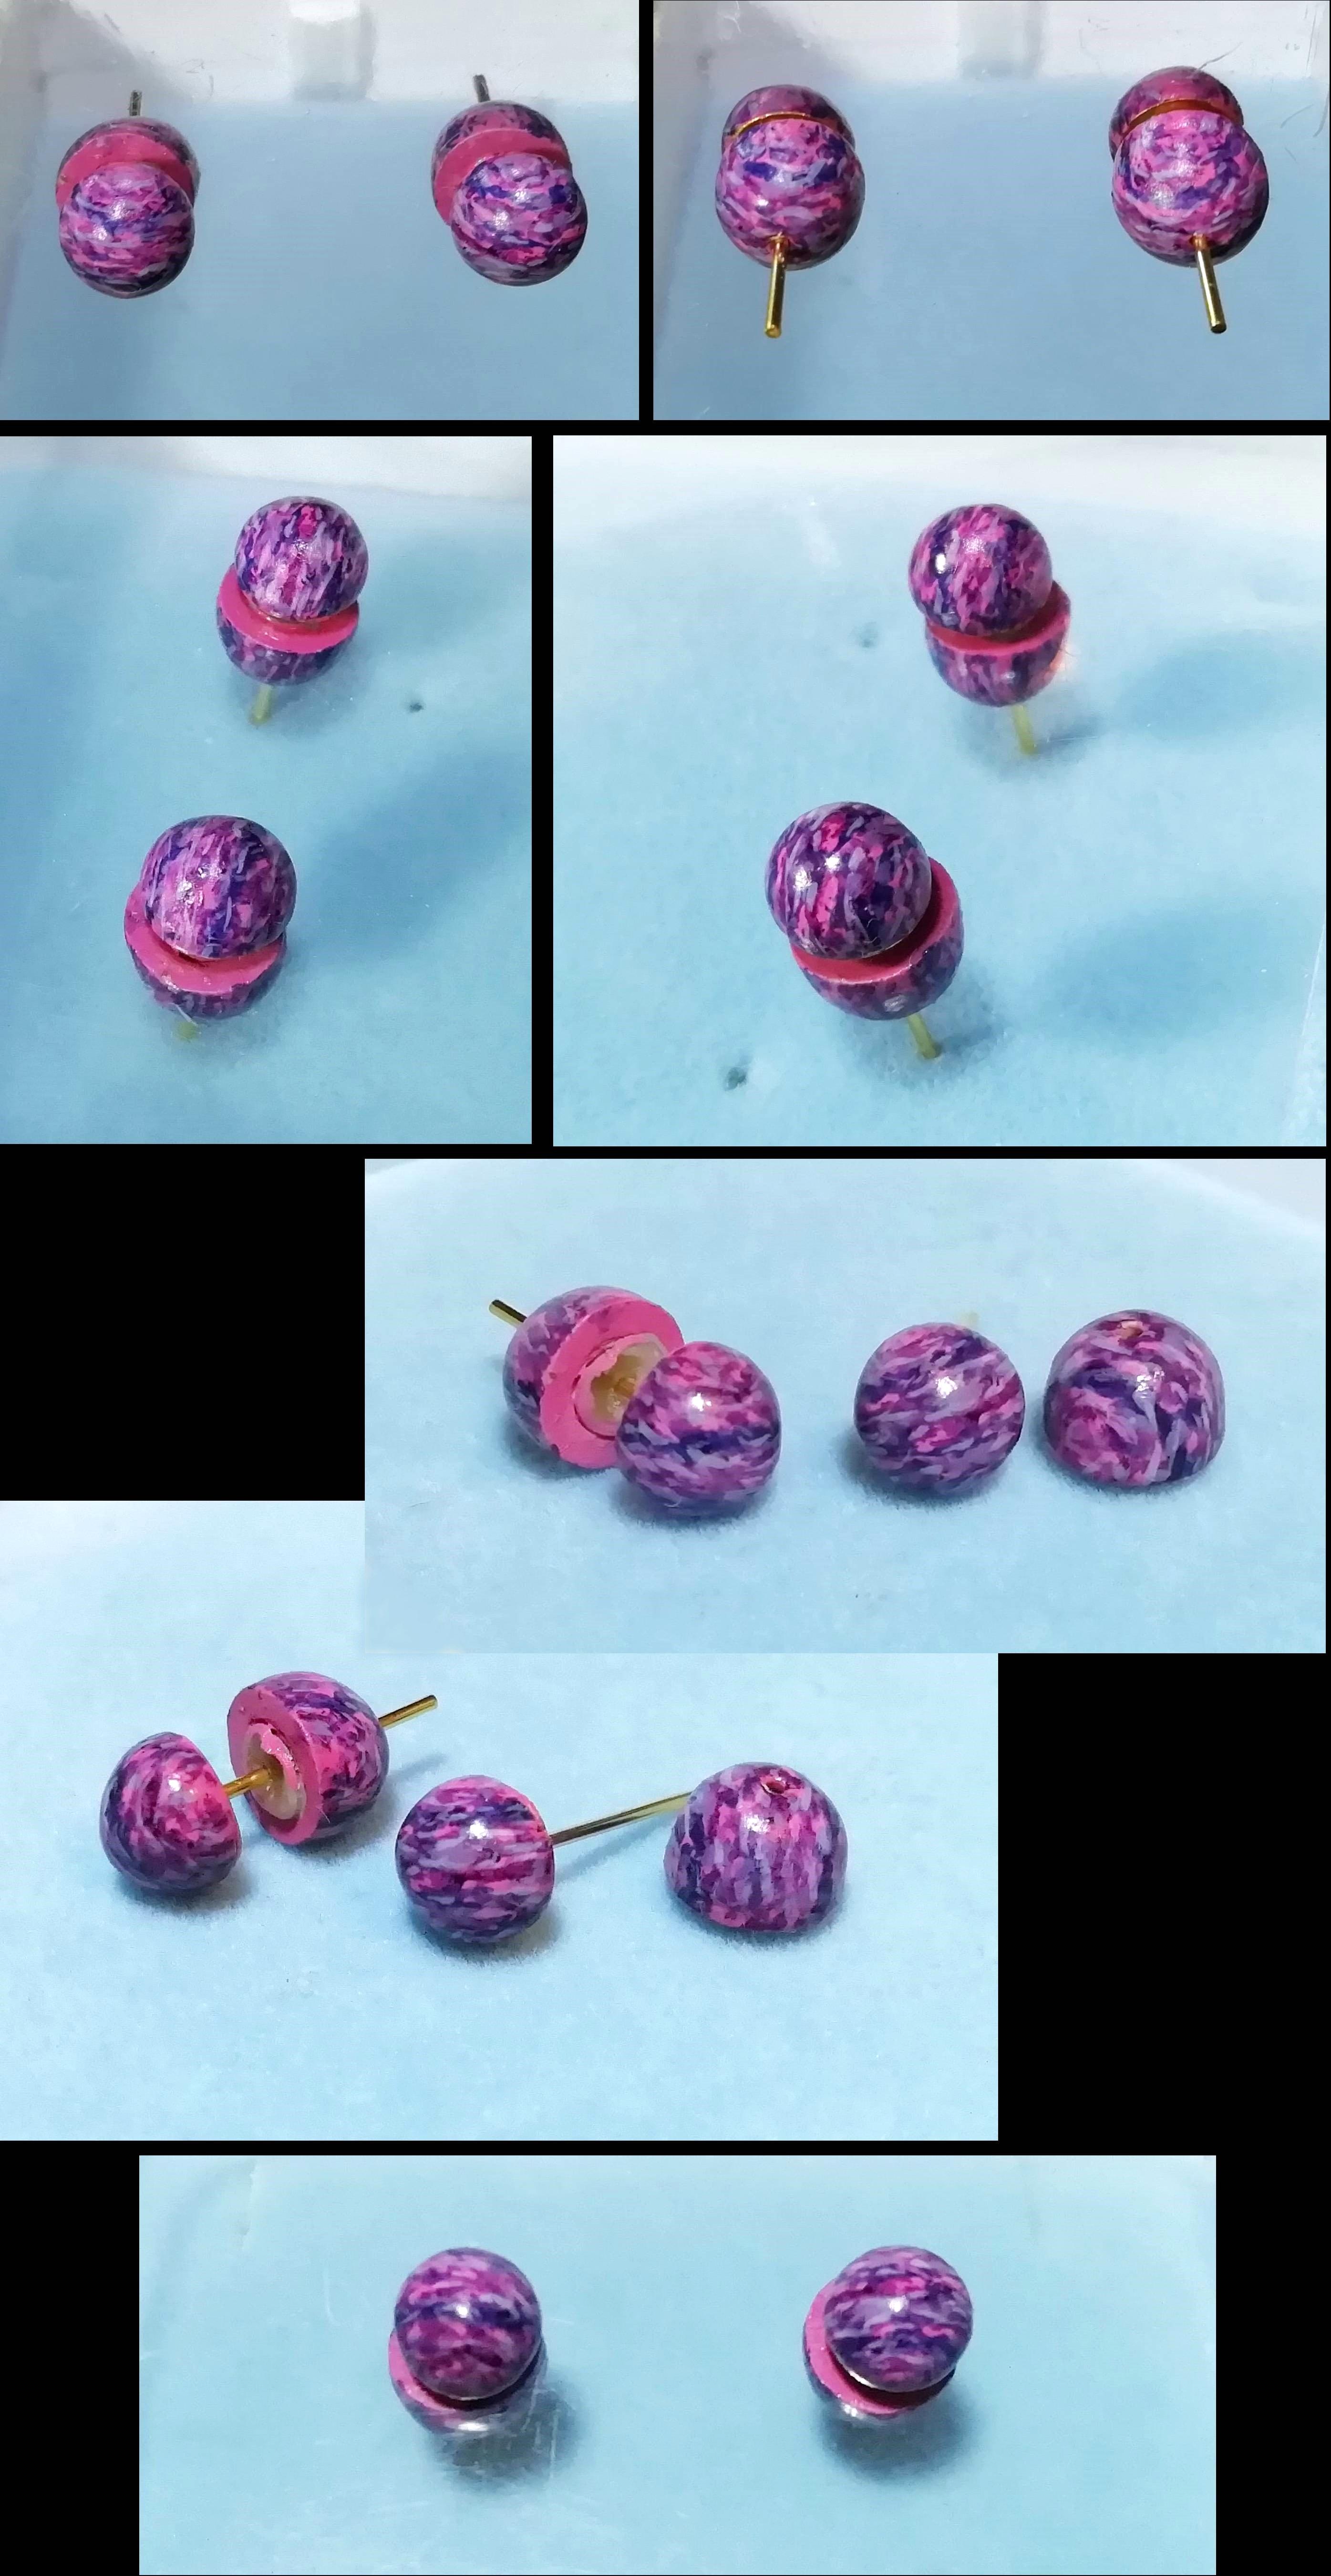 A pair of purple planet earrings